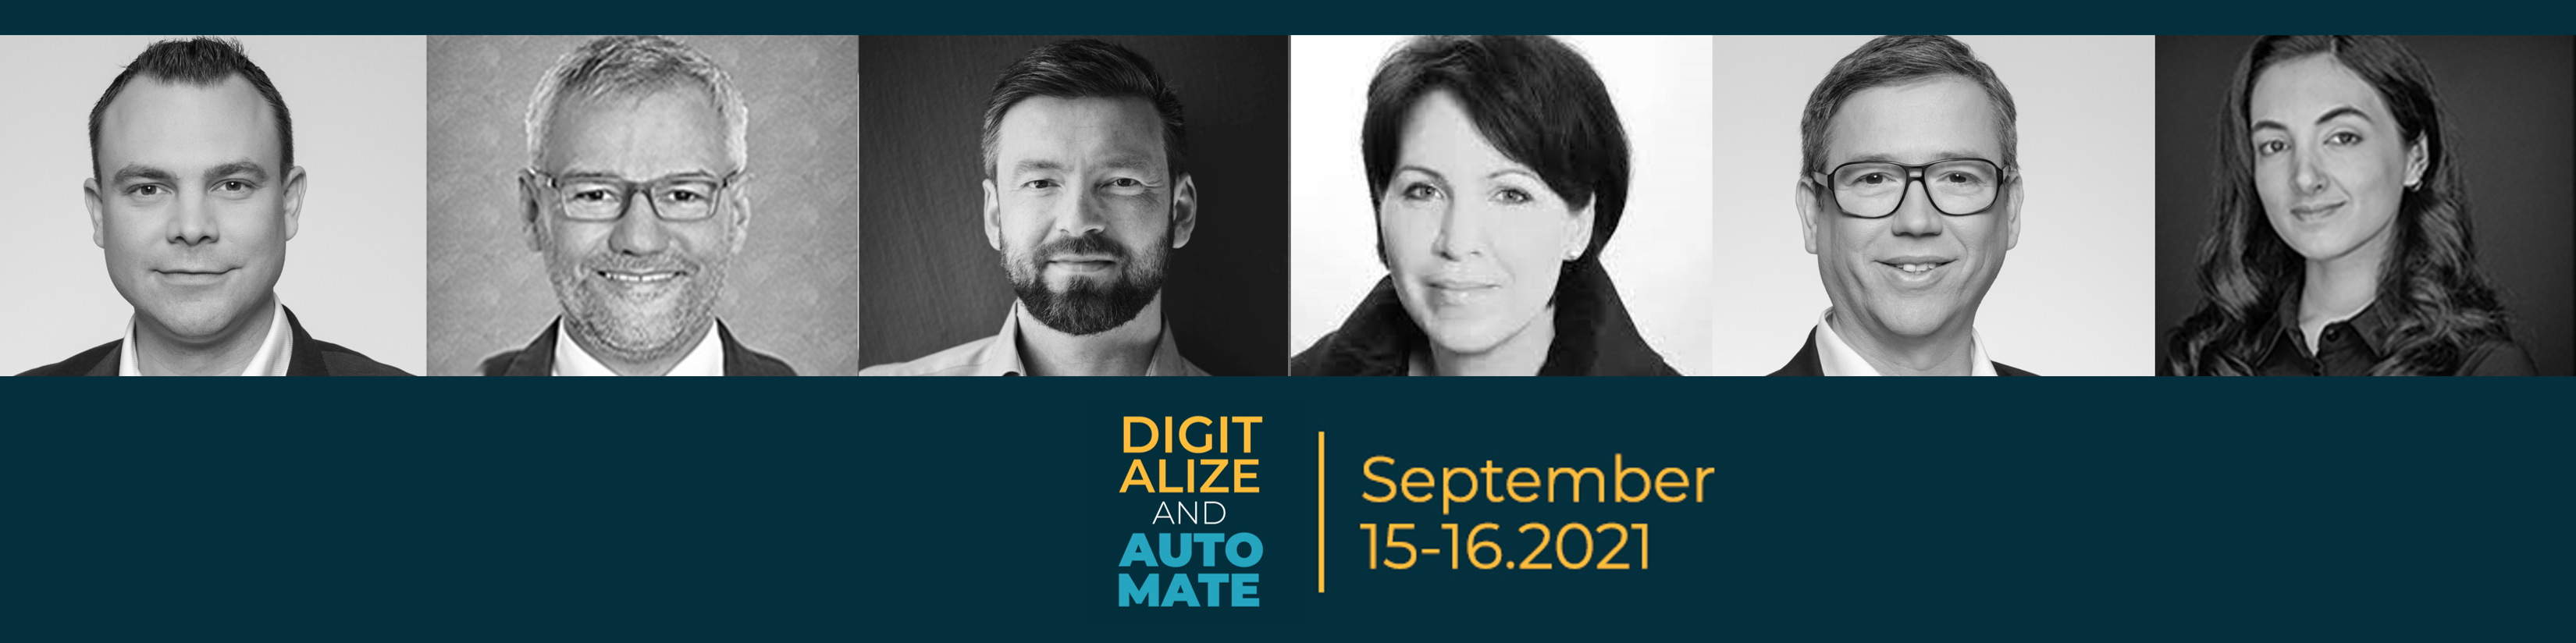 Digitalize and Automate 2021 - German keynote speakers